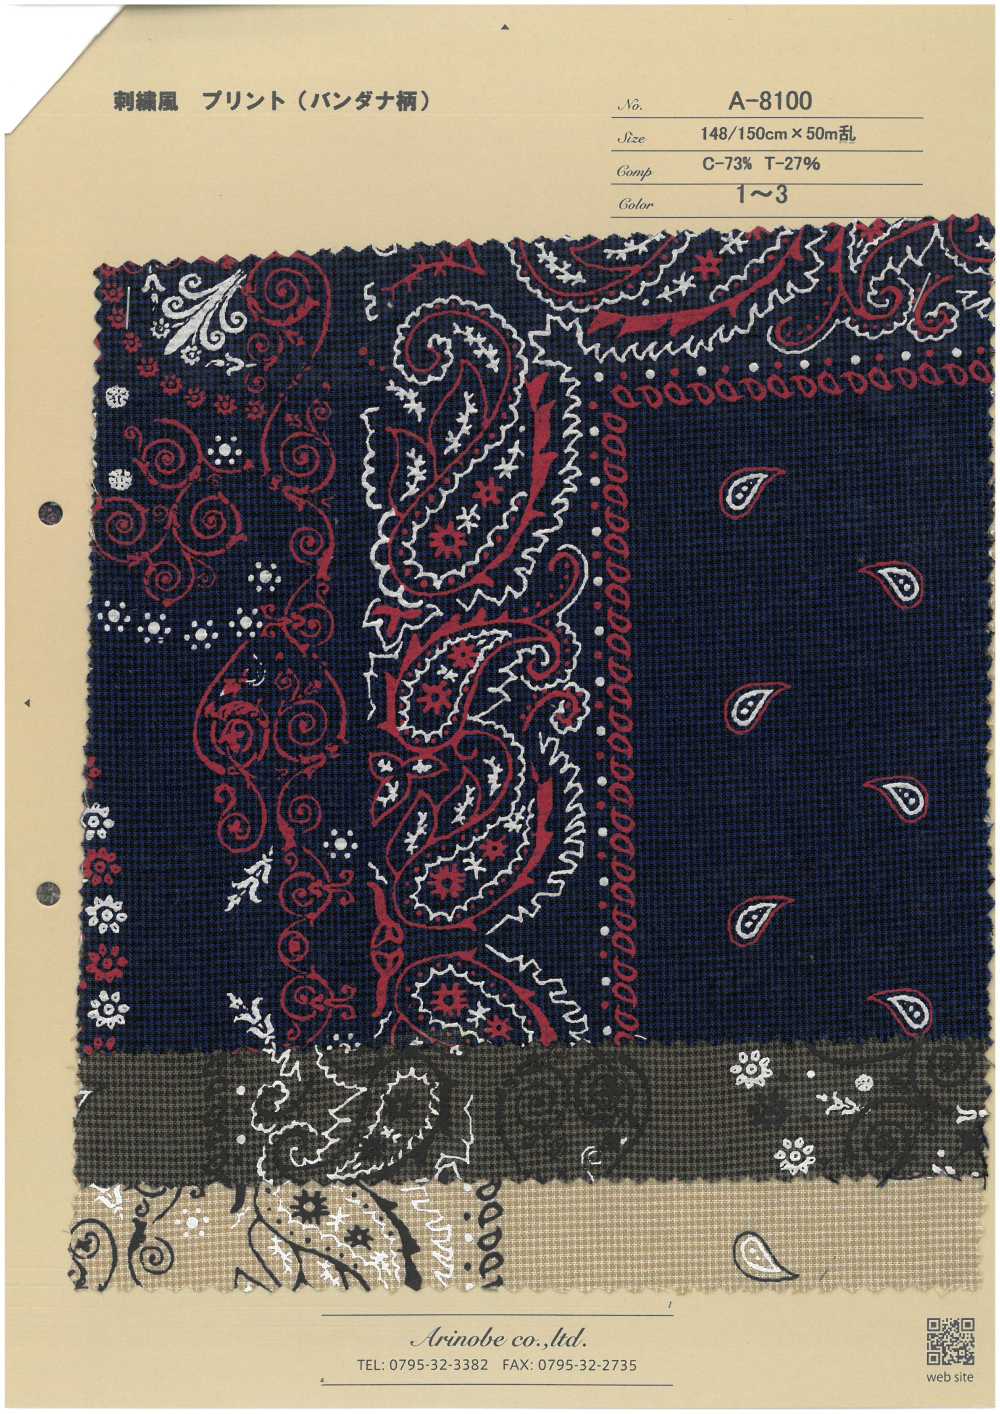 A-8100 Bedrucktes Textil-Bandana-Muster Im Stickstil[Textilgewebe] ARINOBE CO., LTD.